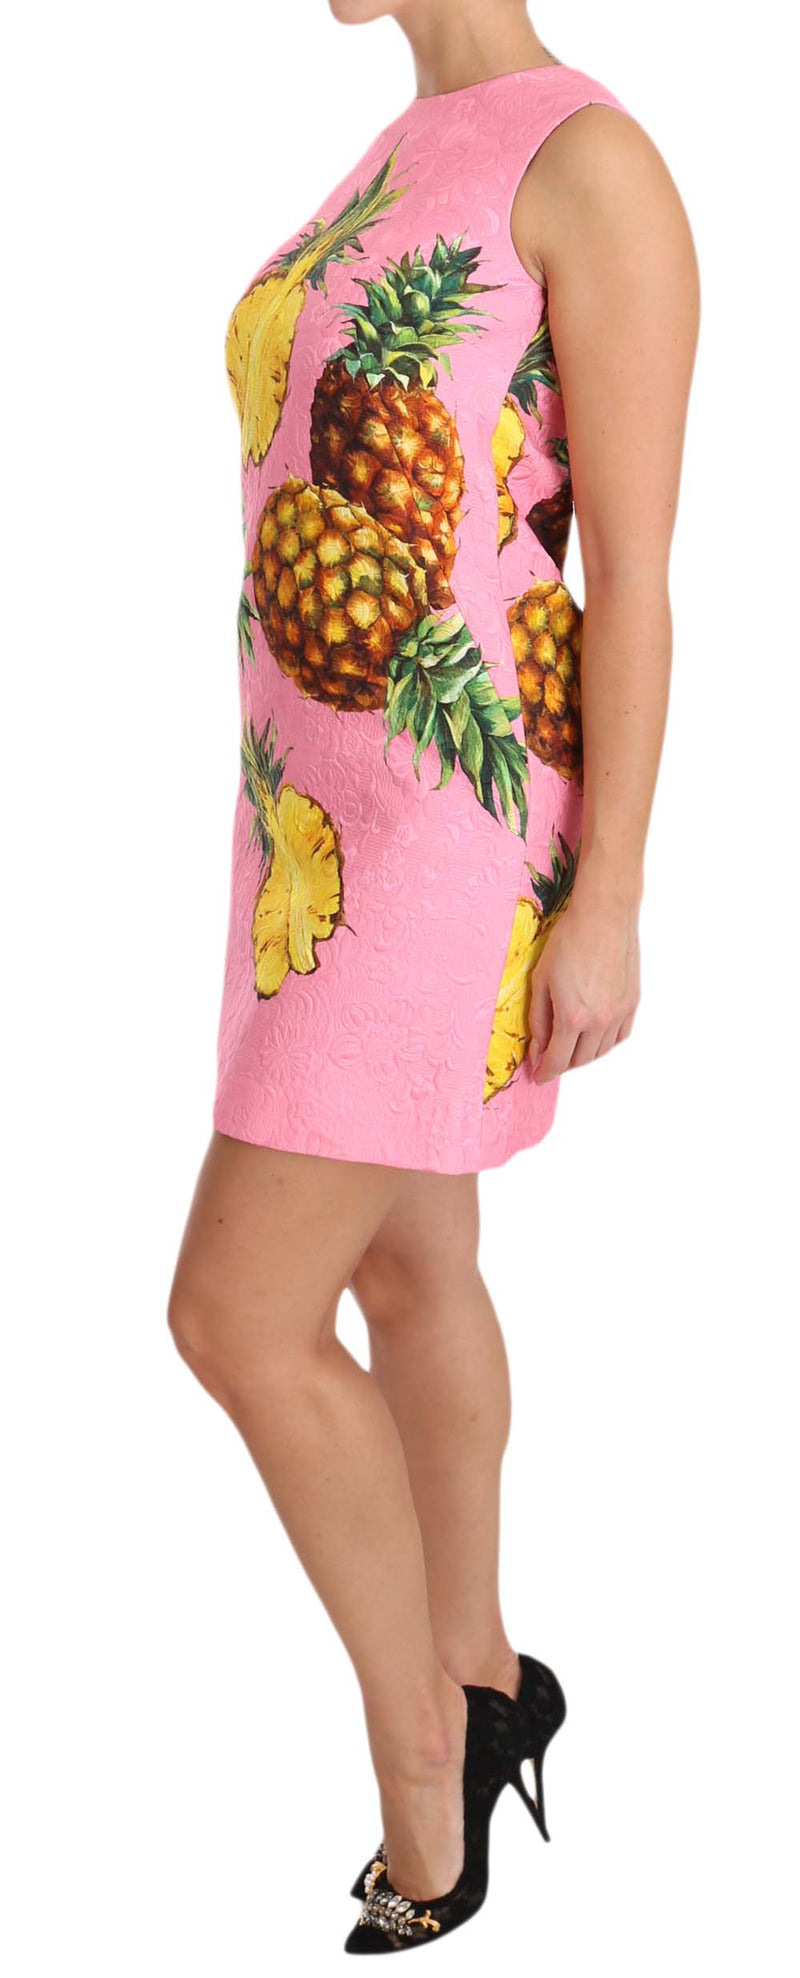 Pink Pineapple Brocade A-Line Dress